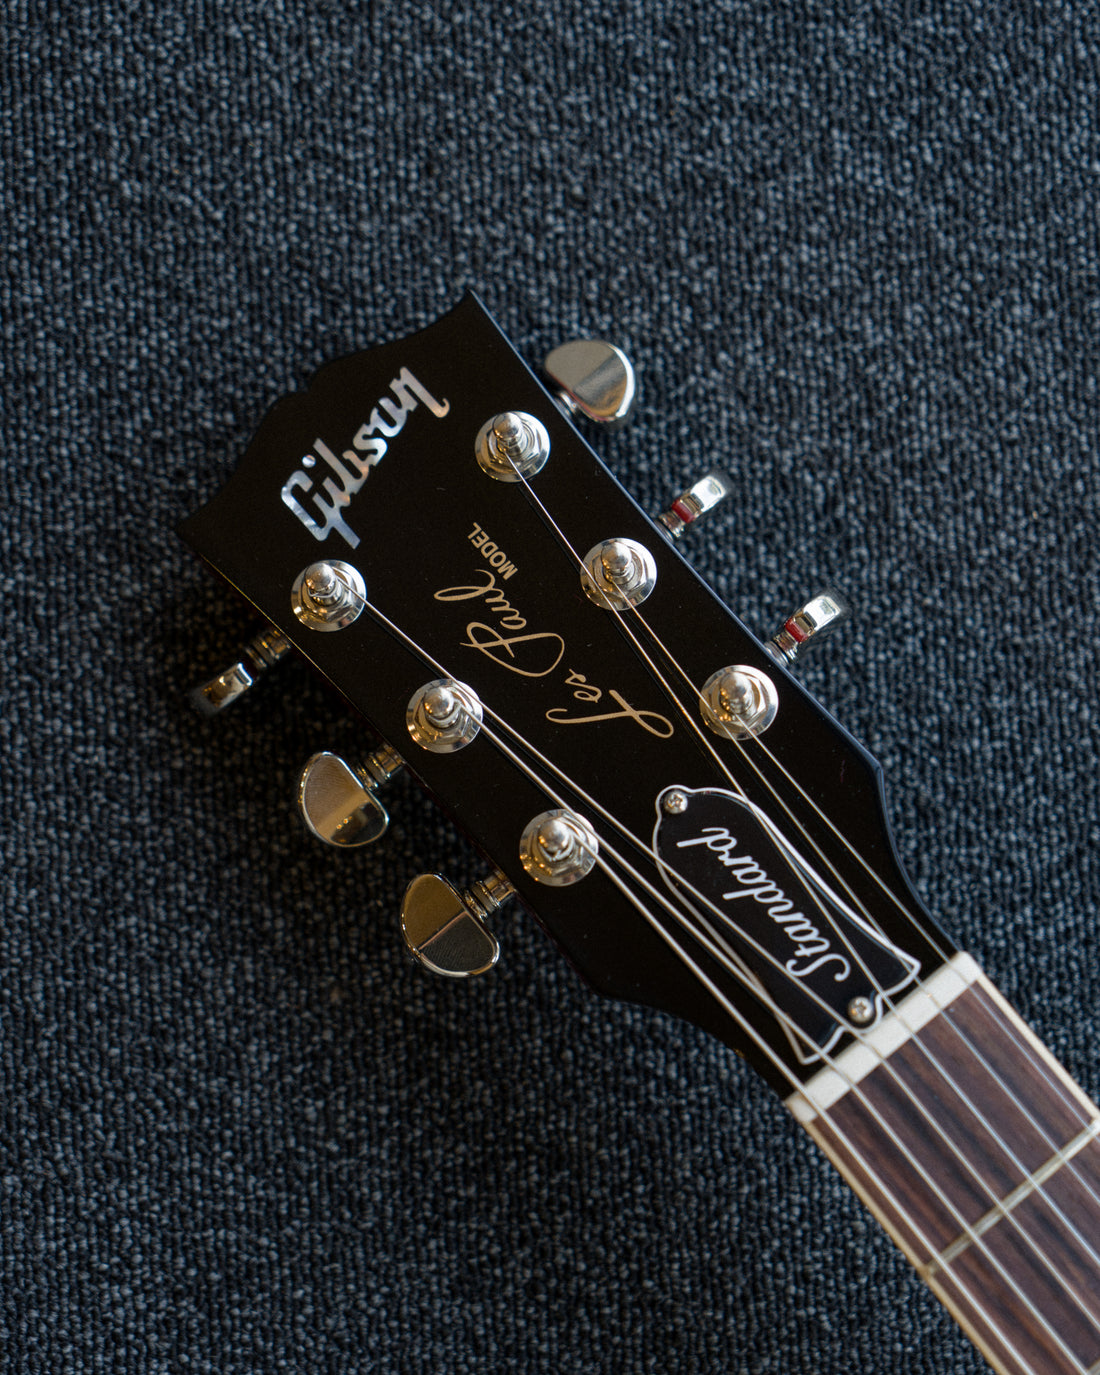 Gibson Les Paul Standard &